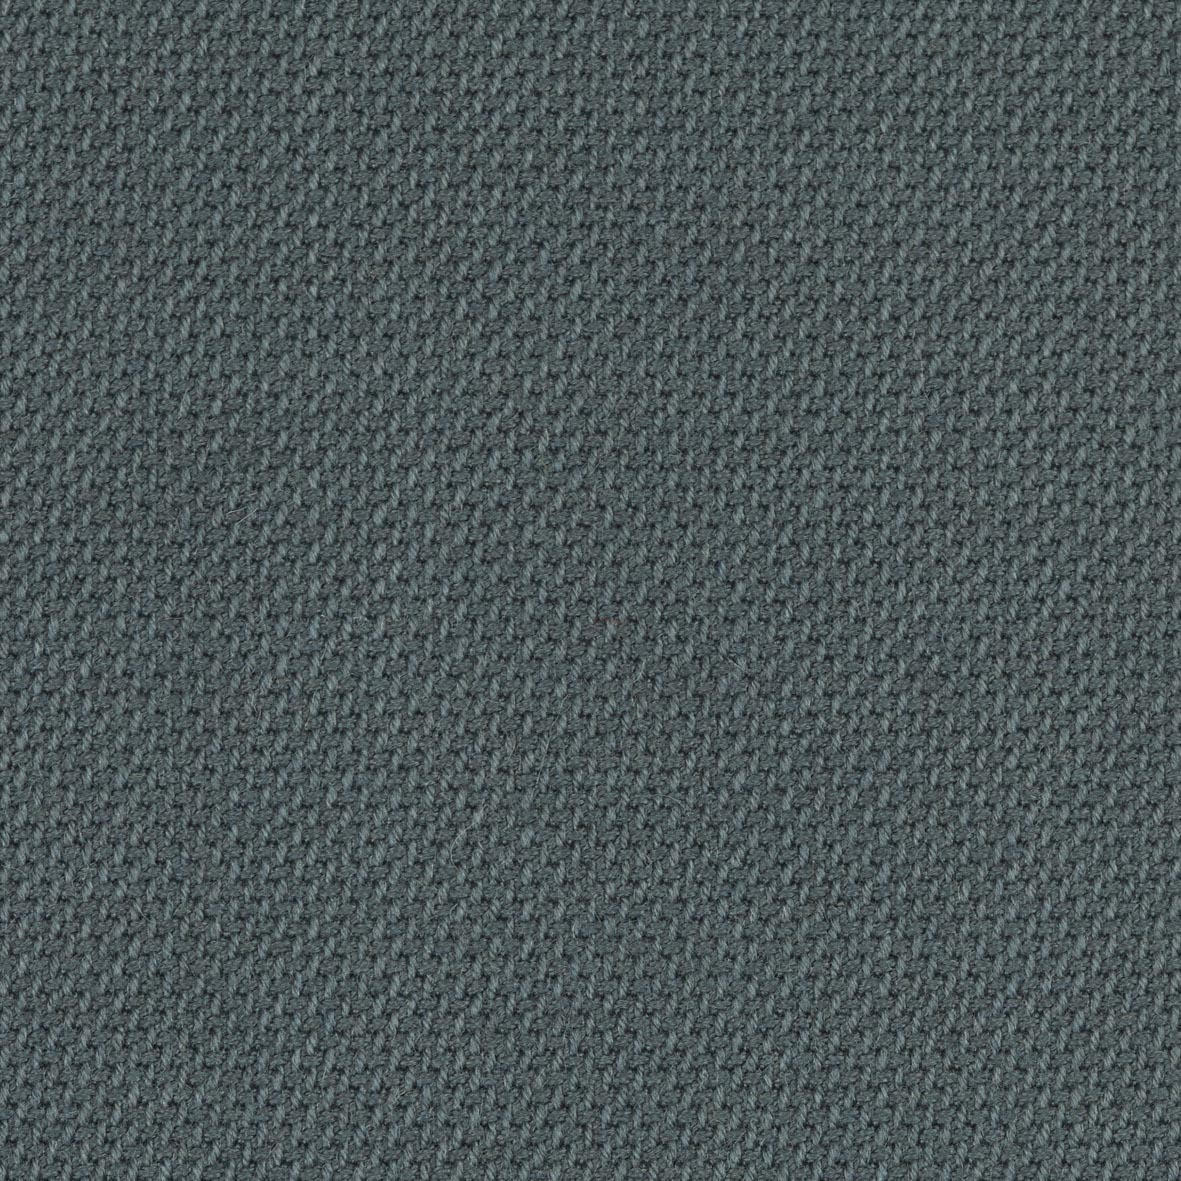 BÜROHOCKER Wollmischung Blau, Grau, Weiß  - Blau/Weiß, Basics, Kunststoff/Textil (55/45,66/55cm) - Aeris